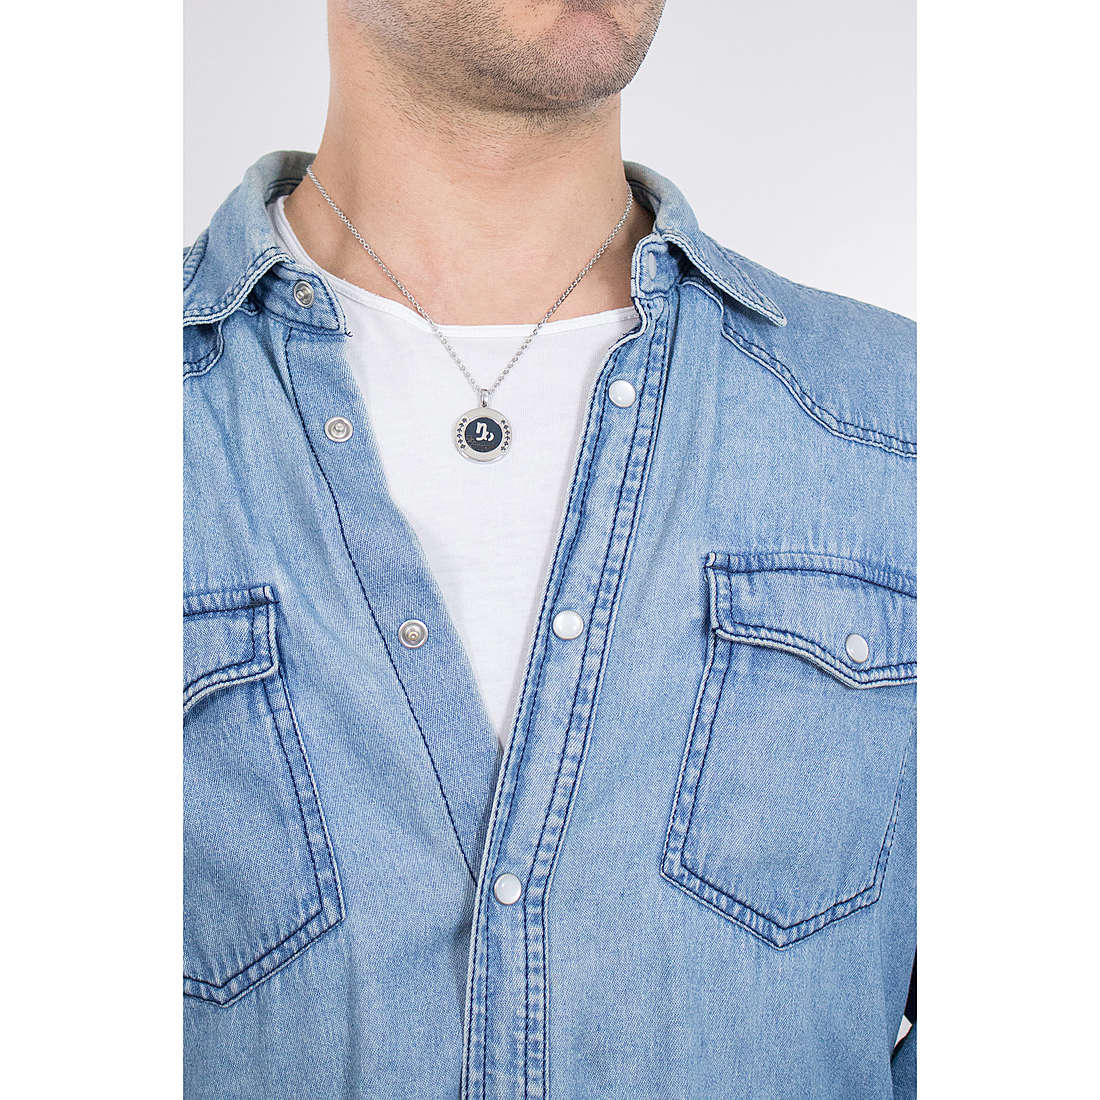 Luca Barra necklaces man LBCA173 wearing